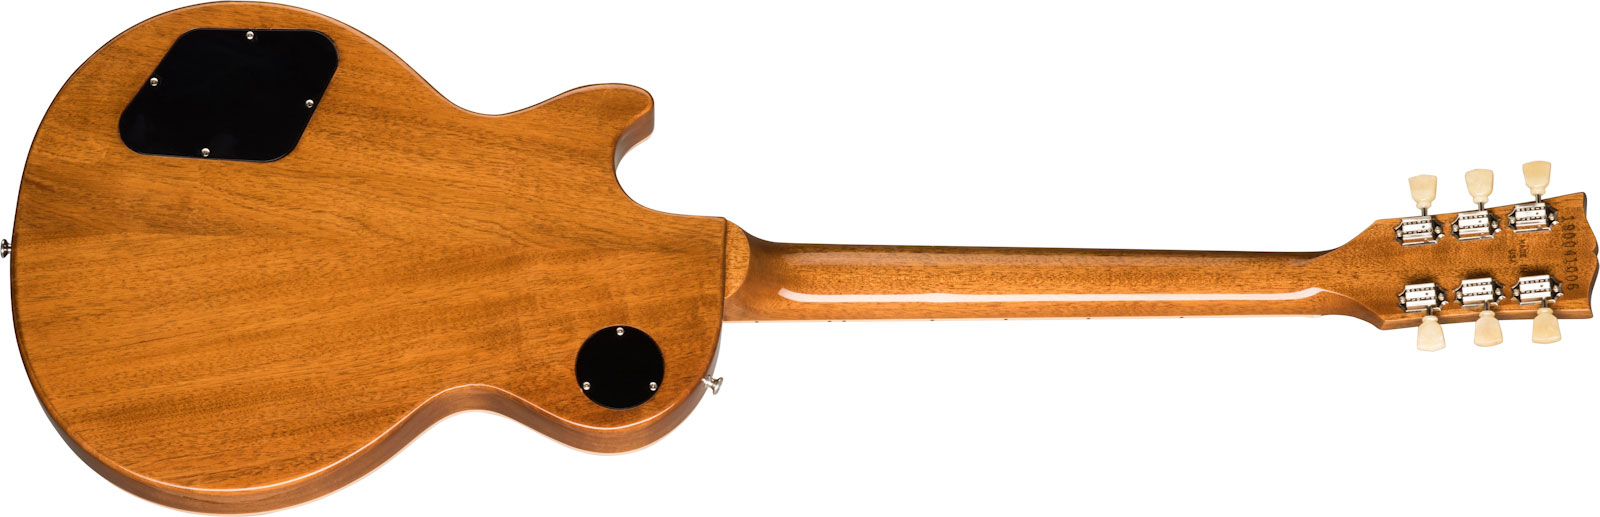 Gibson Les Paul Standard 50s Lh Original Gaucher 2h Ht Rw - Gold Top - Left-handed electric guitar - Variation 1